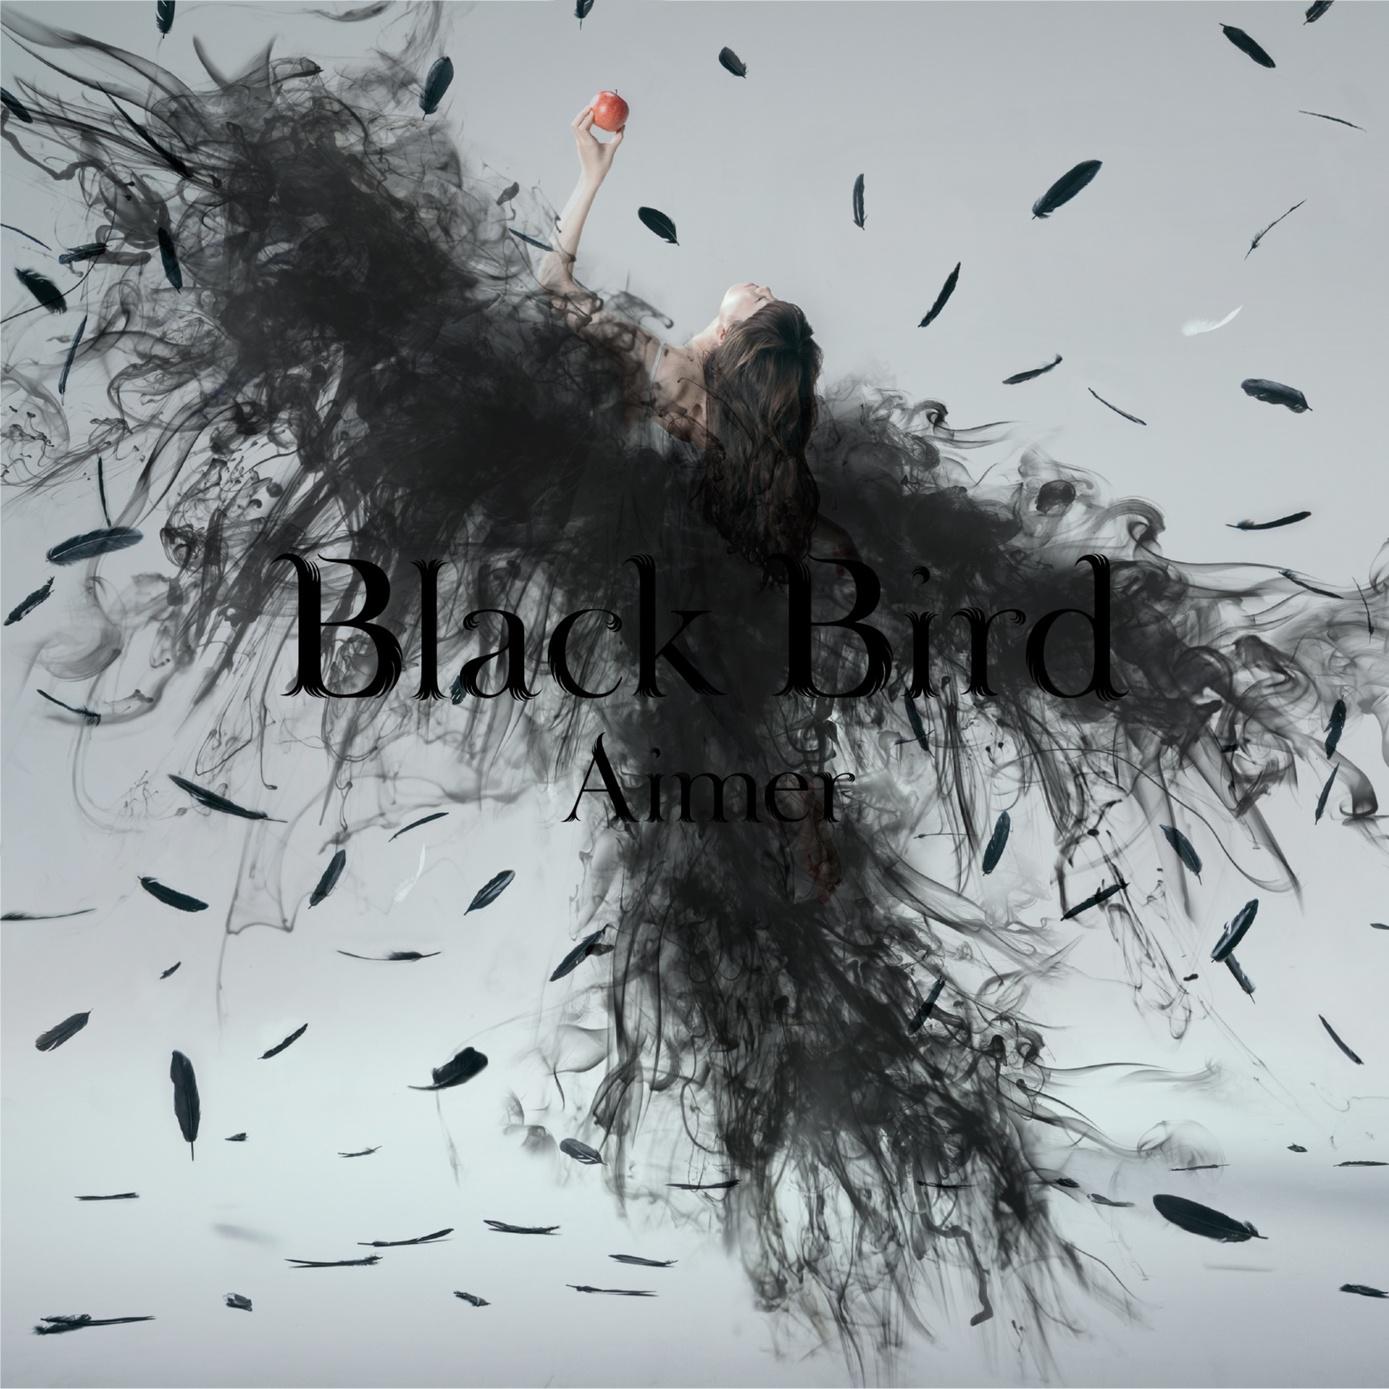 Black Bird (Movie ver.)